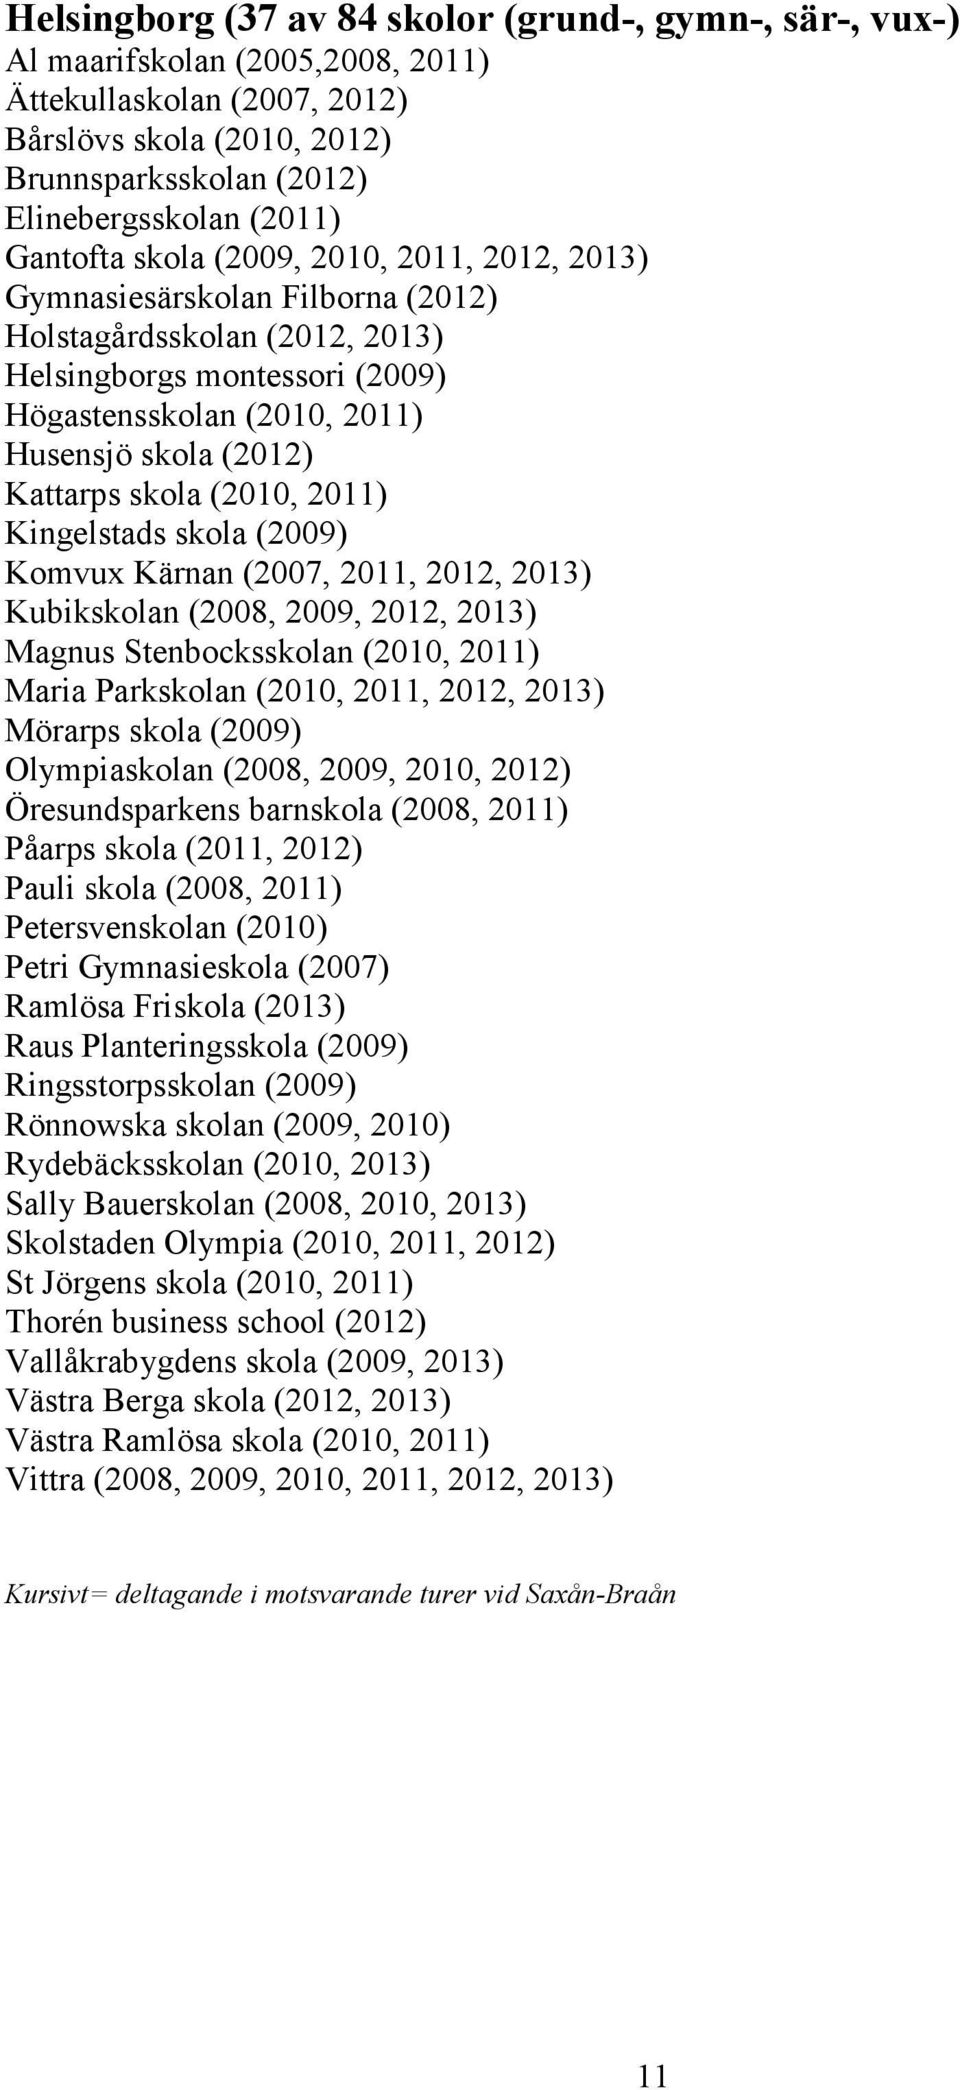 Kattarps skola (2010, 2011) Kingelstads skola (2009) Komvux Kärnan (2007, 2011, 2012, 2013) Kubikskolan (2008, 2009, 2012, 2013) Magnus Stenbocksskolan (2010, 2011) Maria Parkskolan (2010, 2011,